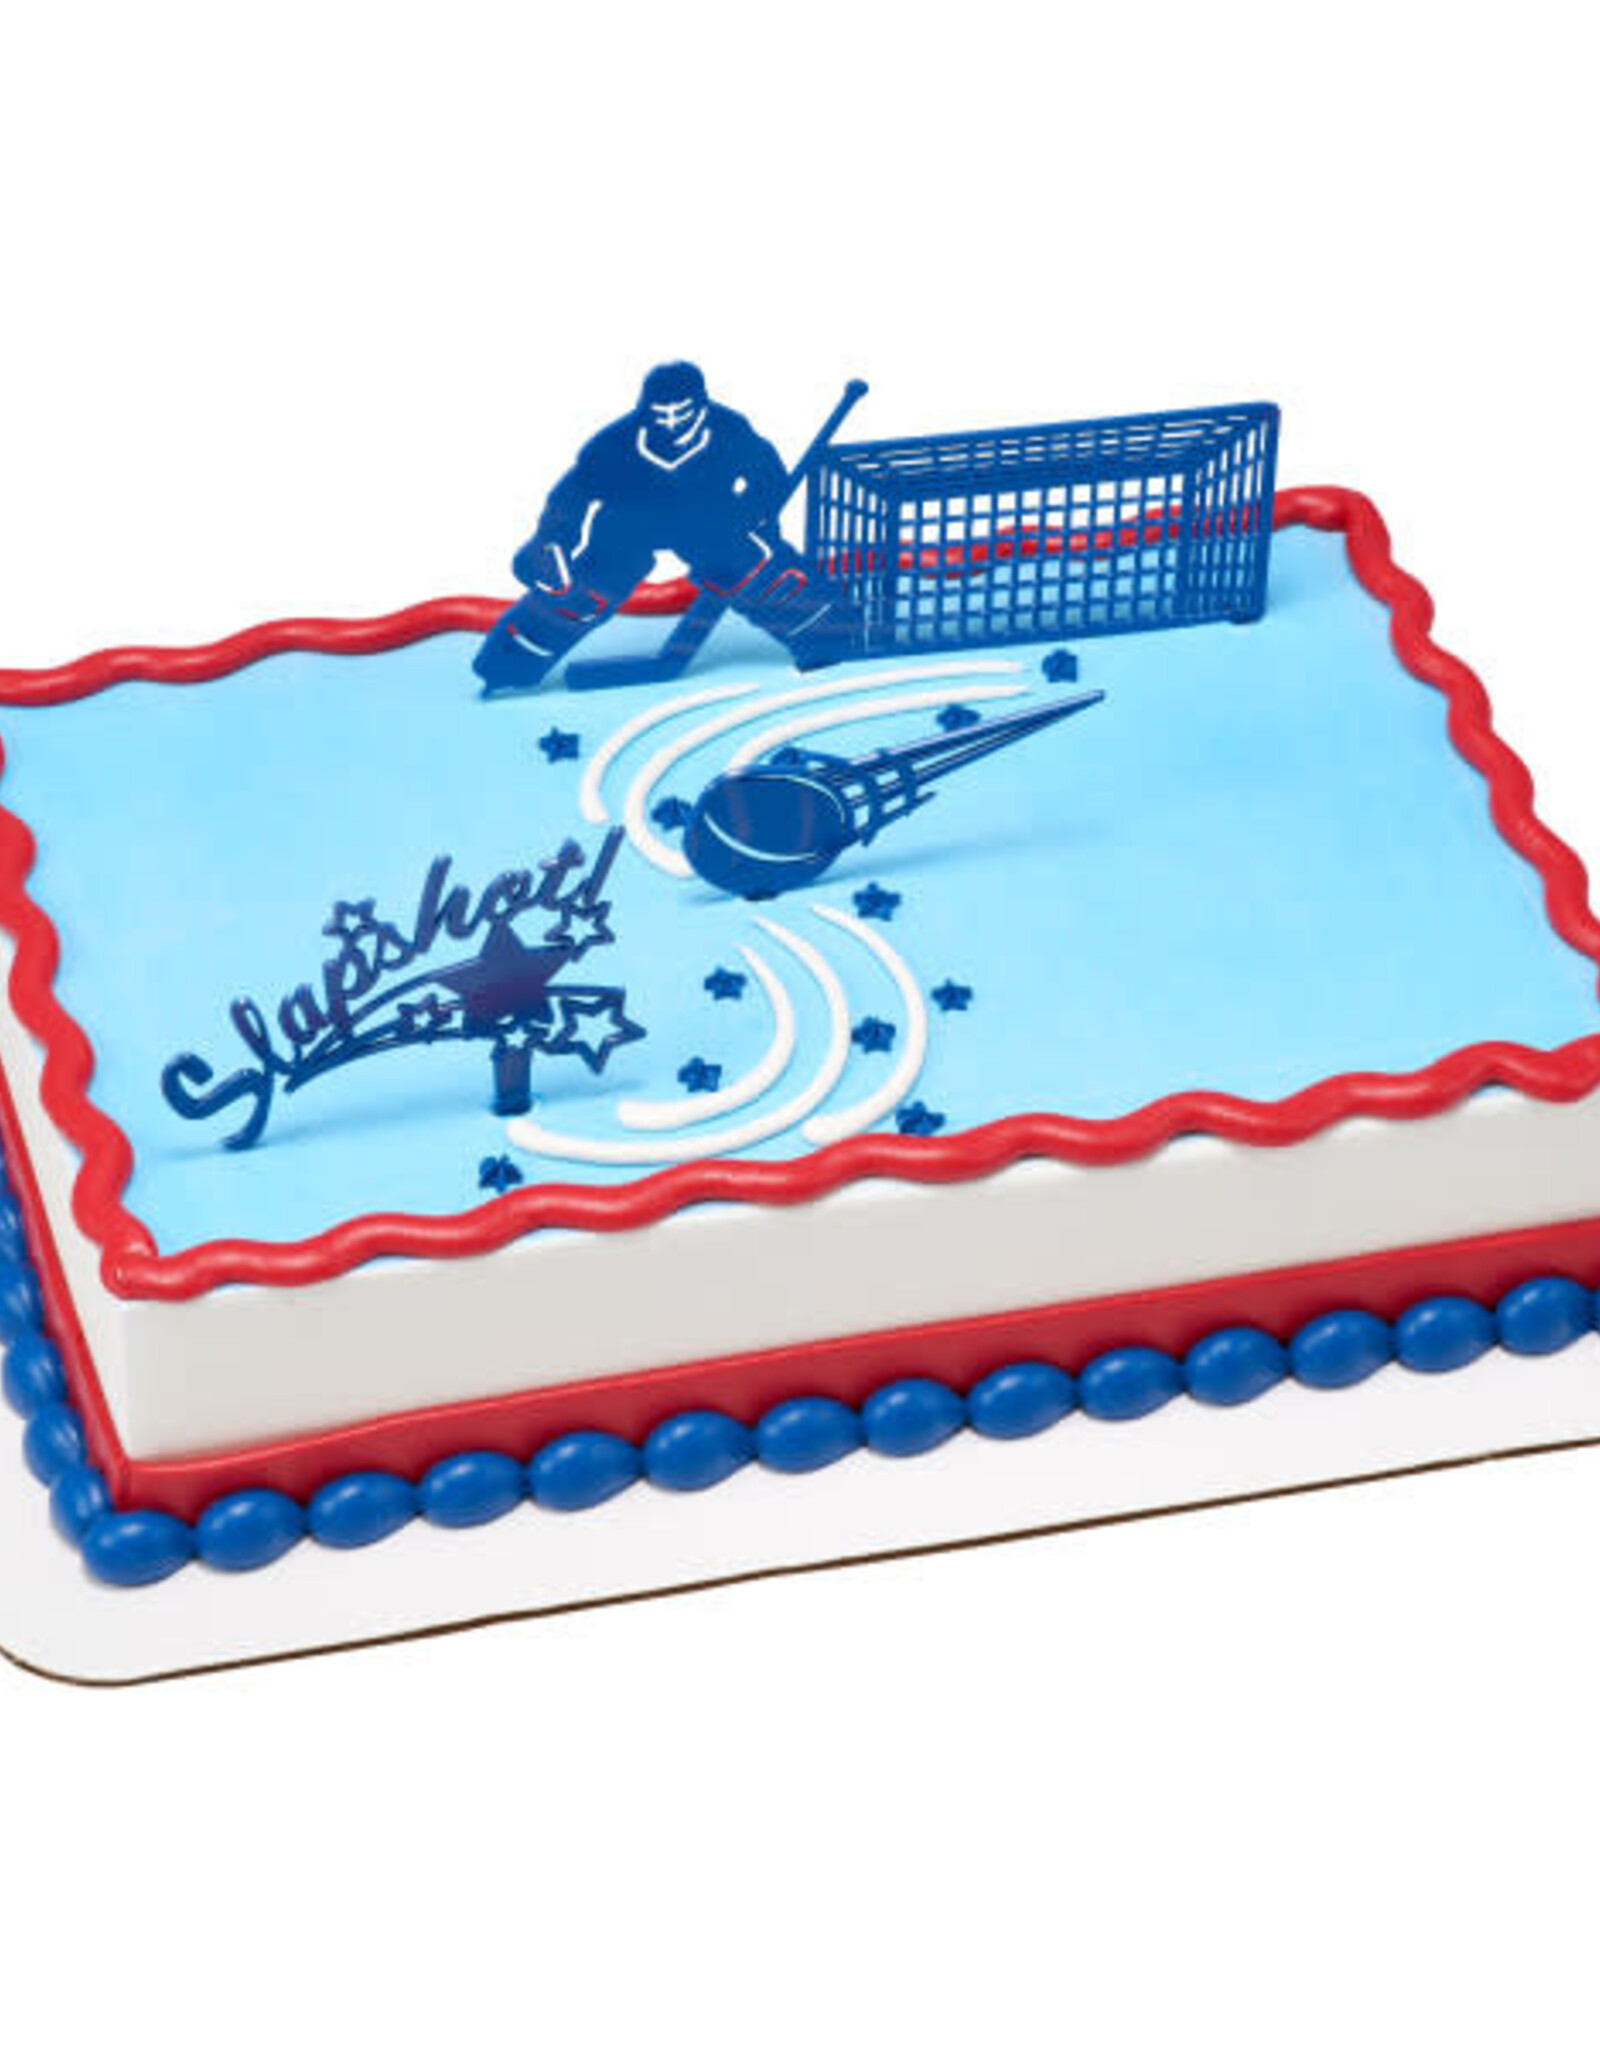 Hockey Slapshsot Cake Topper